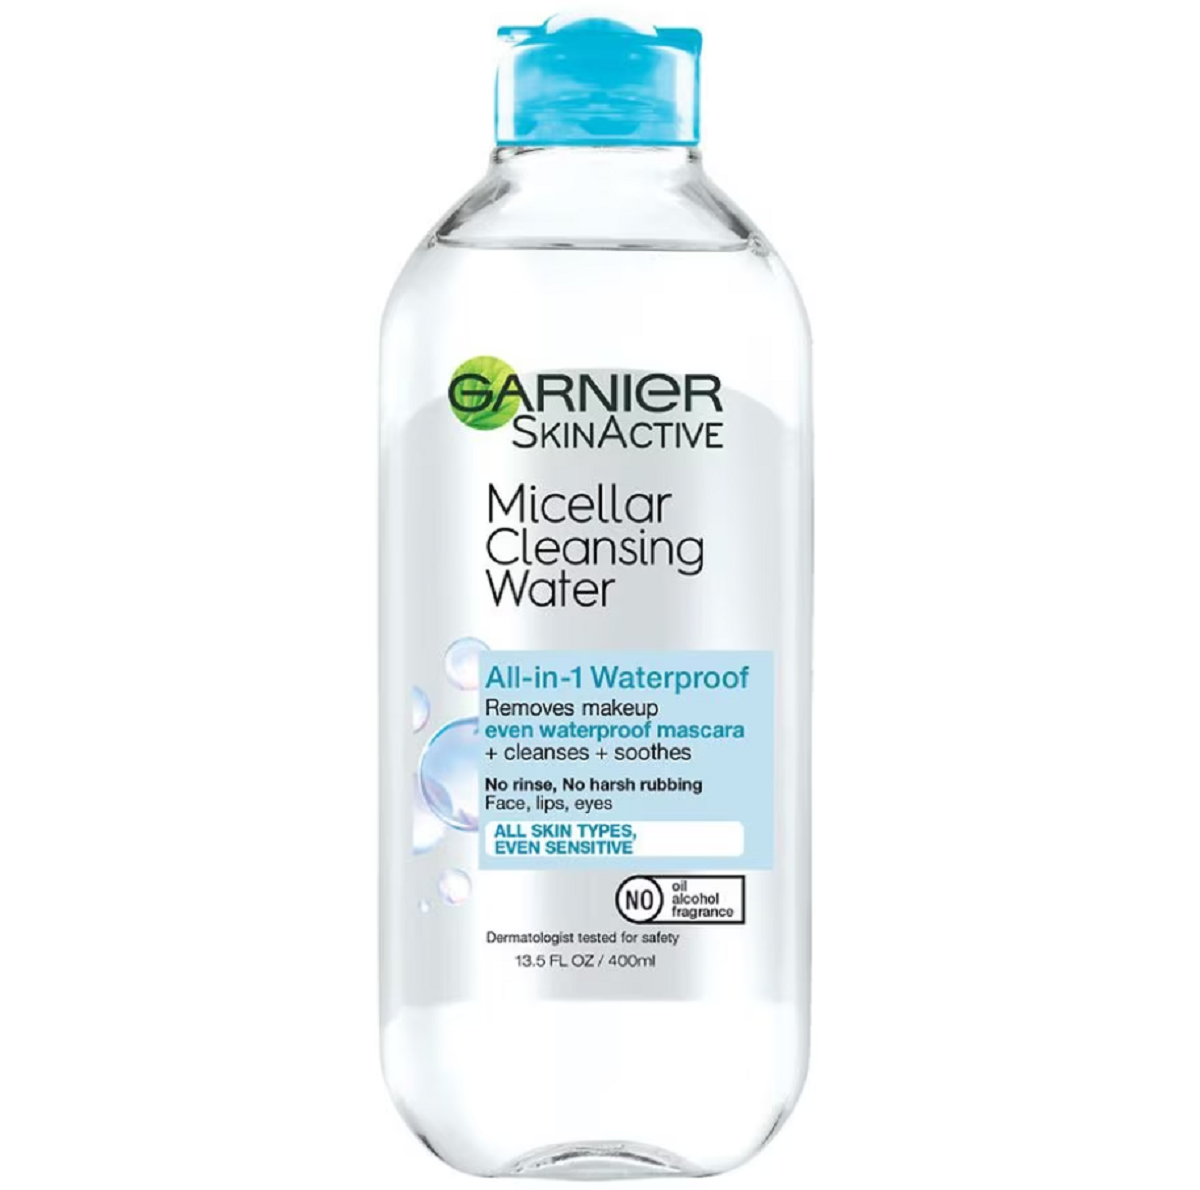 SkinActive Micellar Cleansing Water For Waterproof & Long-Wear Makeup, Garnier Skinactive Micellar Cleansing Water